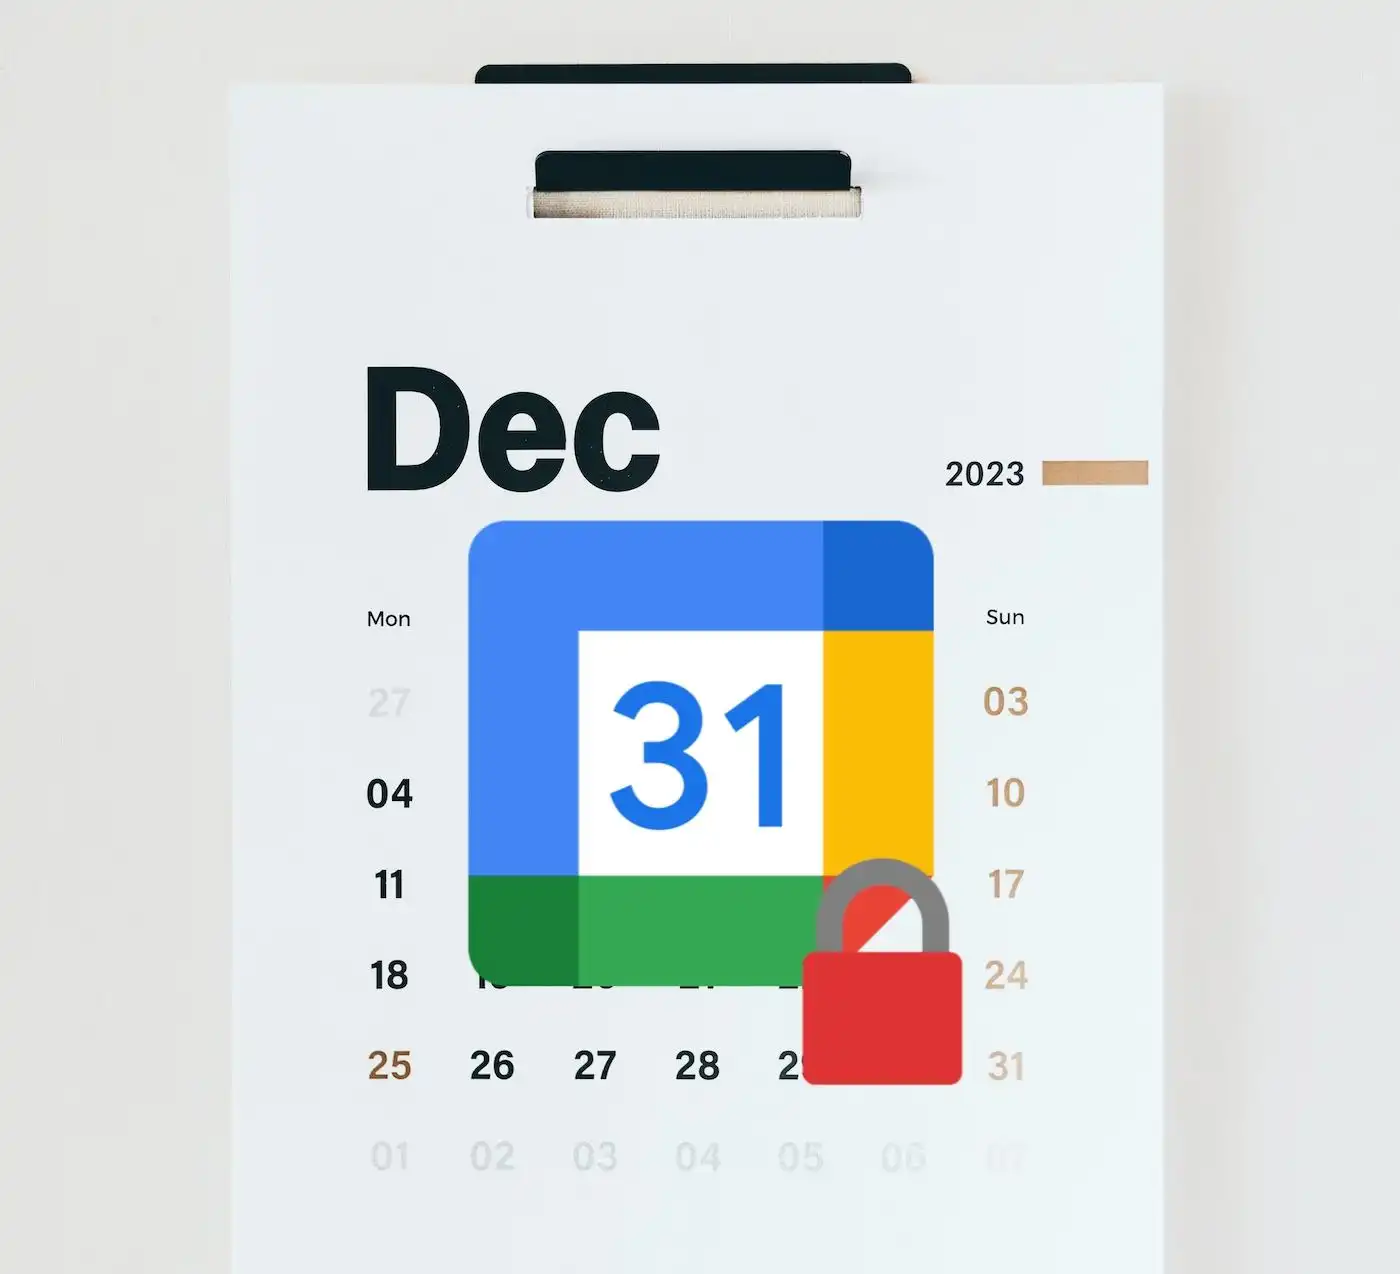 Set Google Calendar private: Step-by-step guide